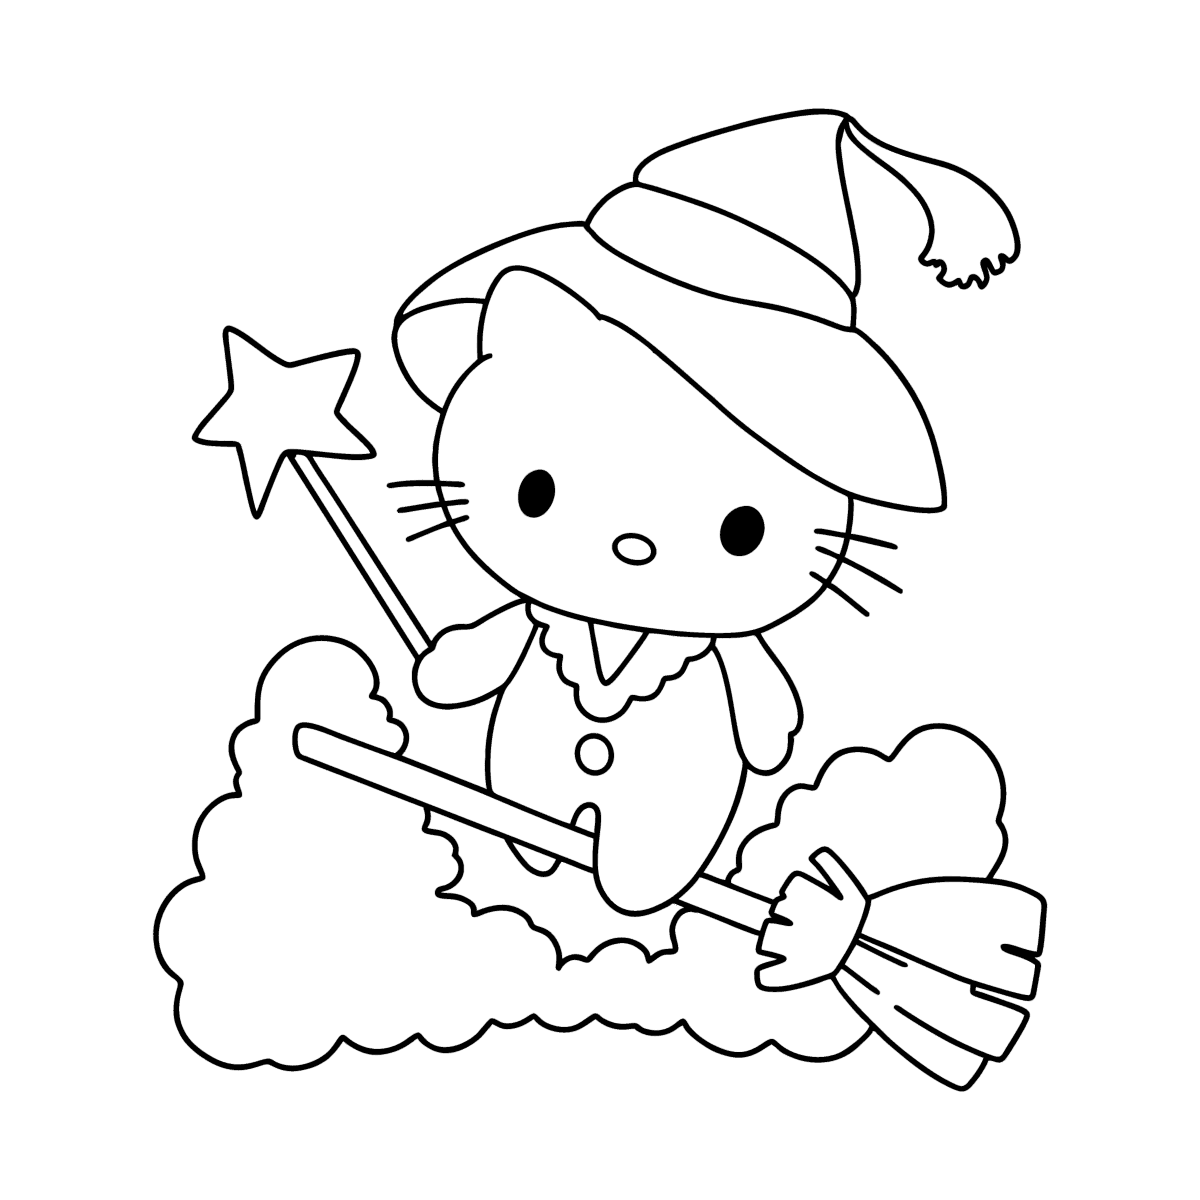 Desenhos para colorir Hello Kitty Halloween com a sua abobora.